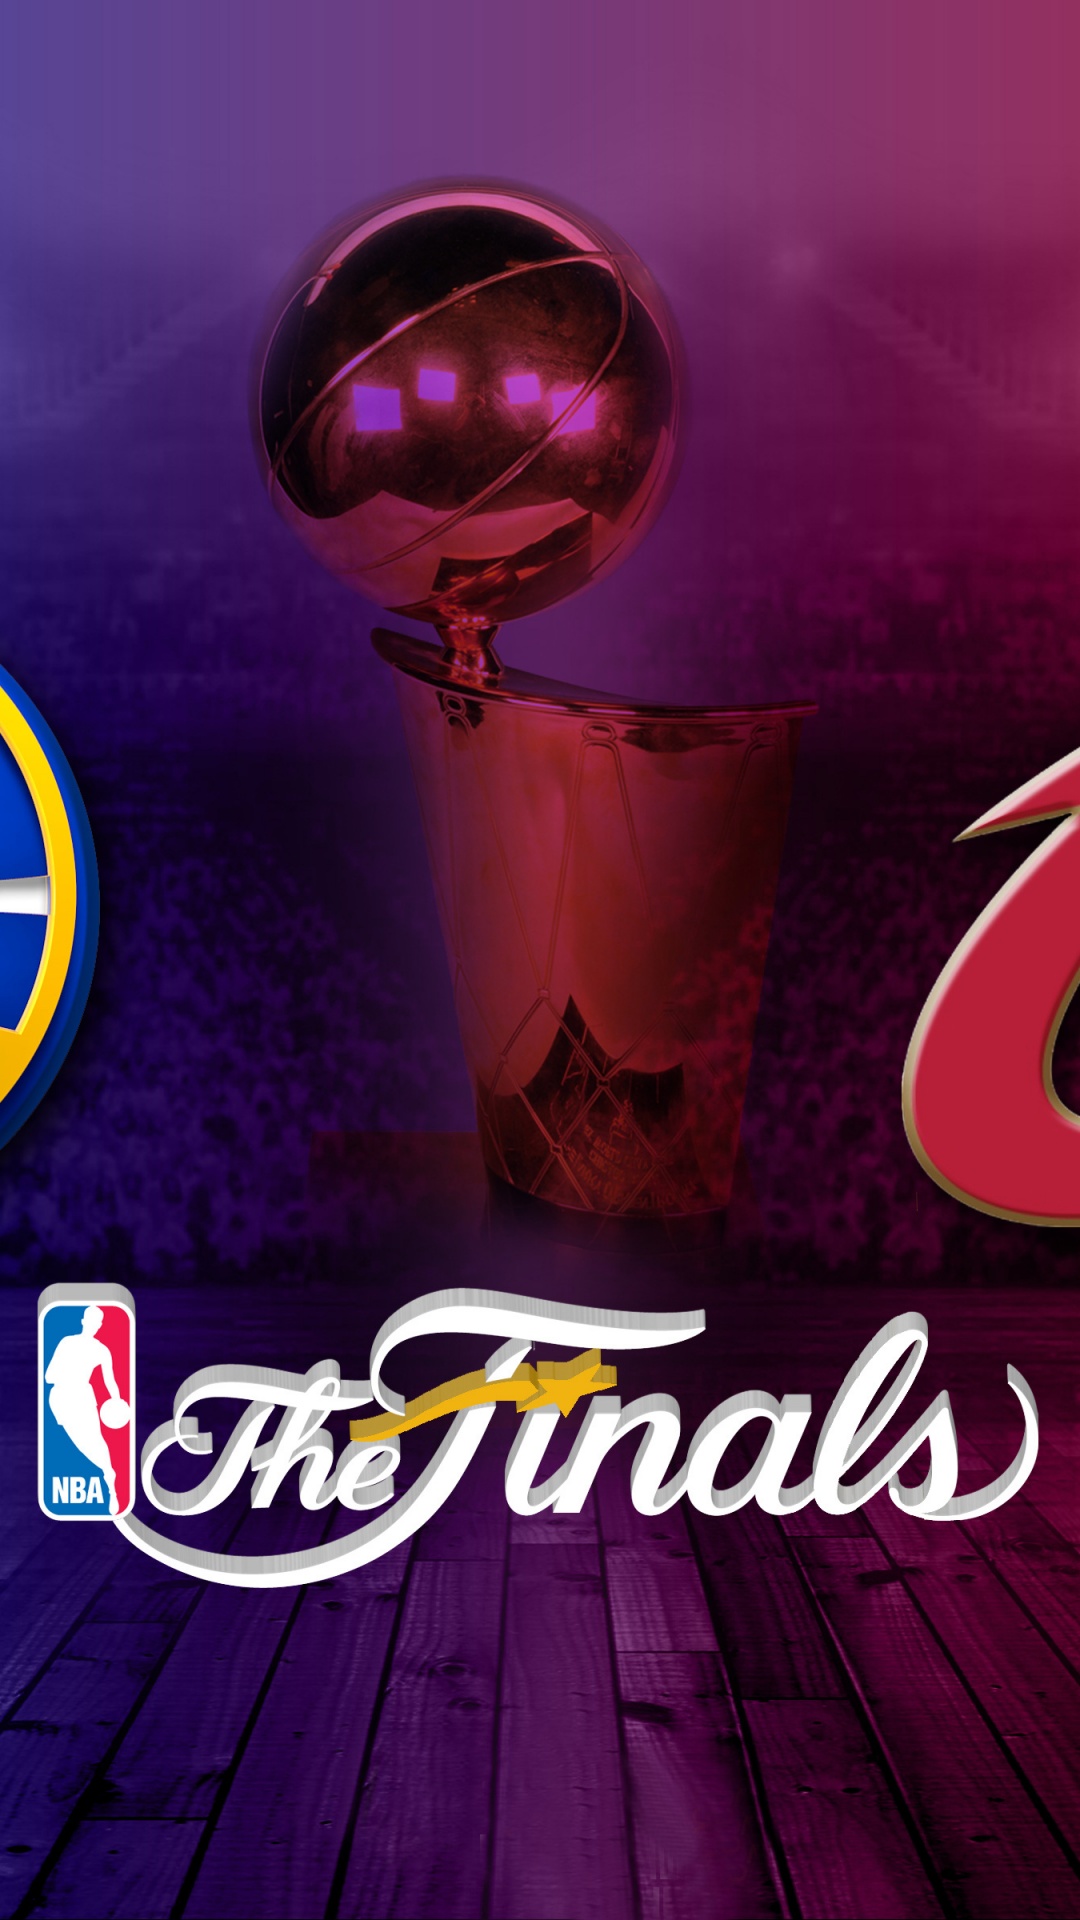 Warriors Vs Cavaliers 2015 NBA Finals